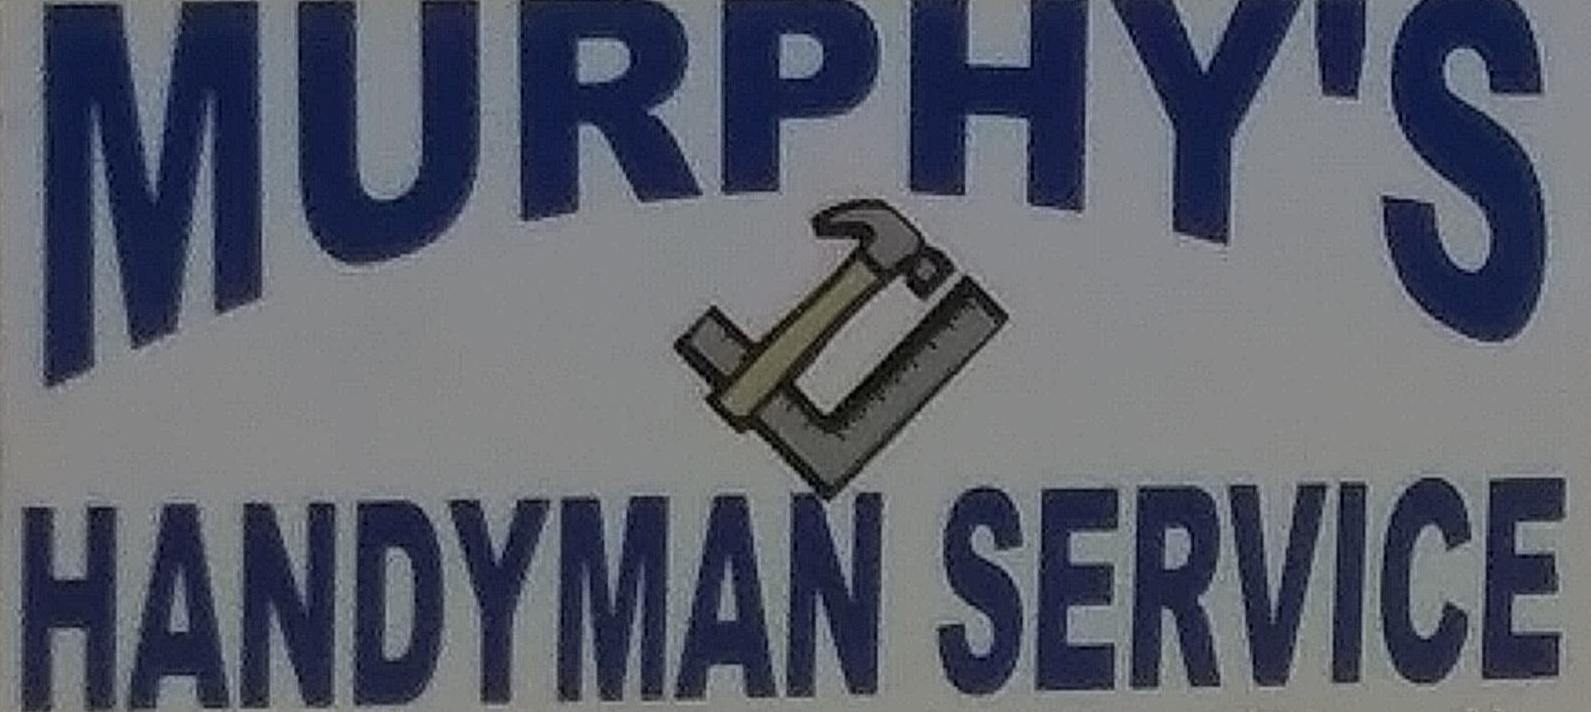 Murphys Handyman Service